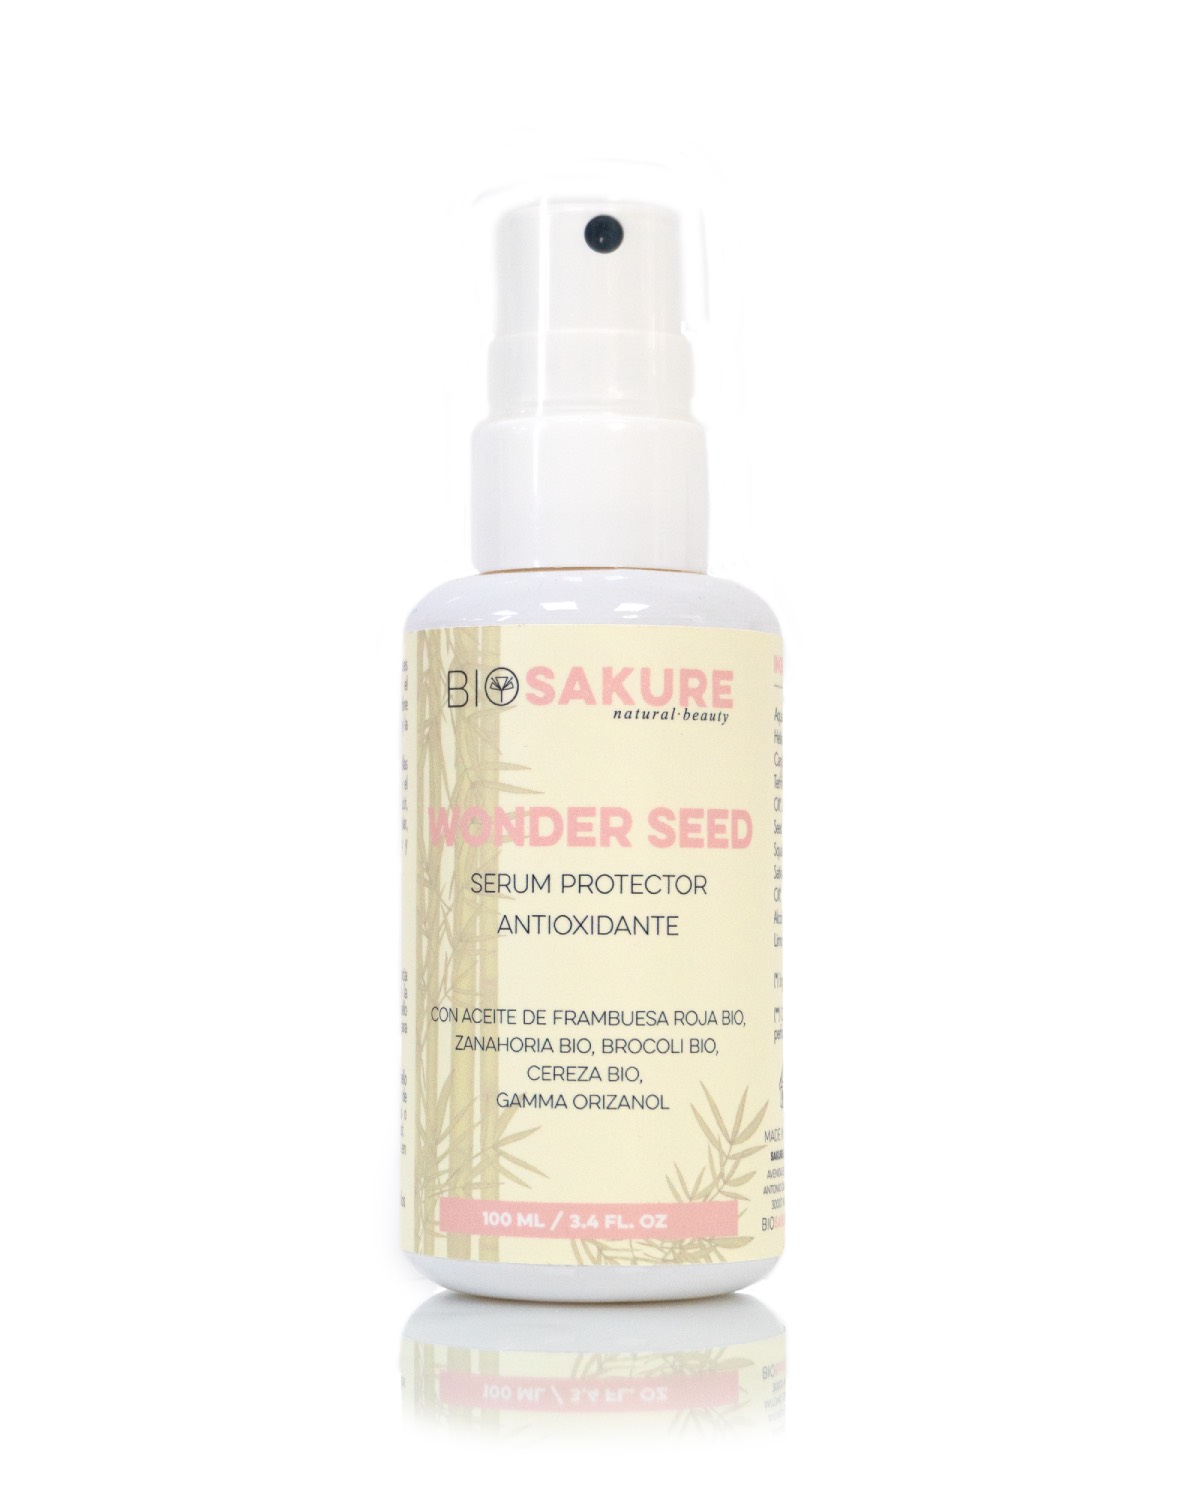 wonder-seed-serum-antioxidante-protector-del-cabello-100ml-BioSakure-3995